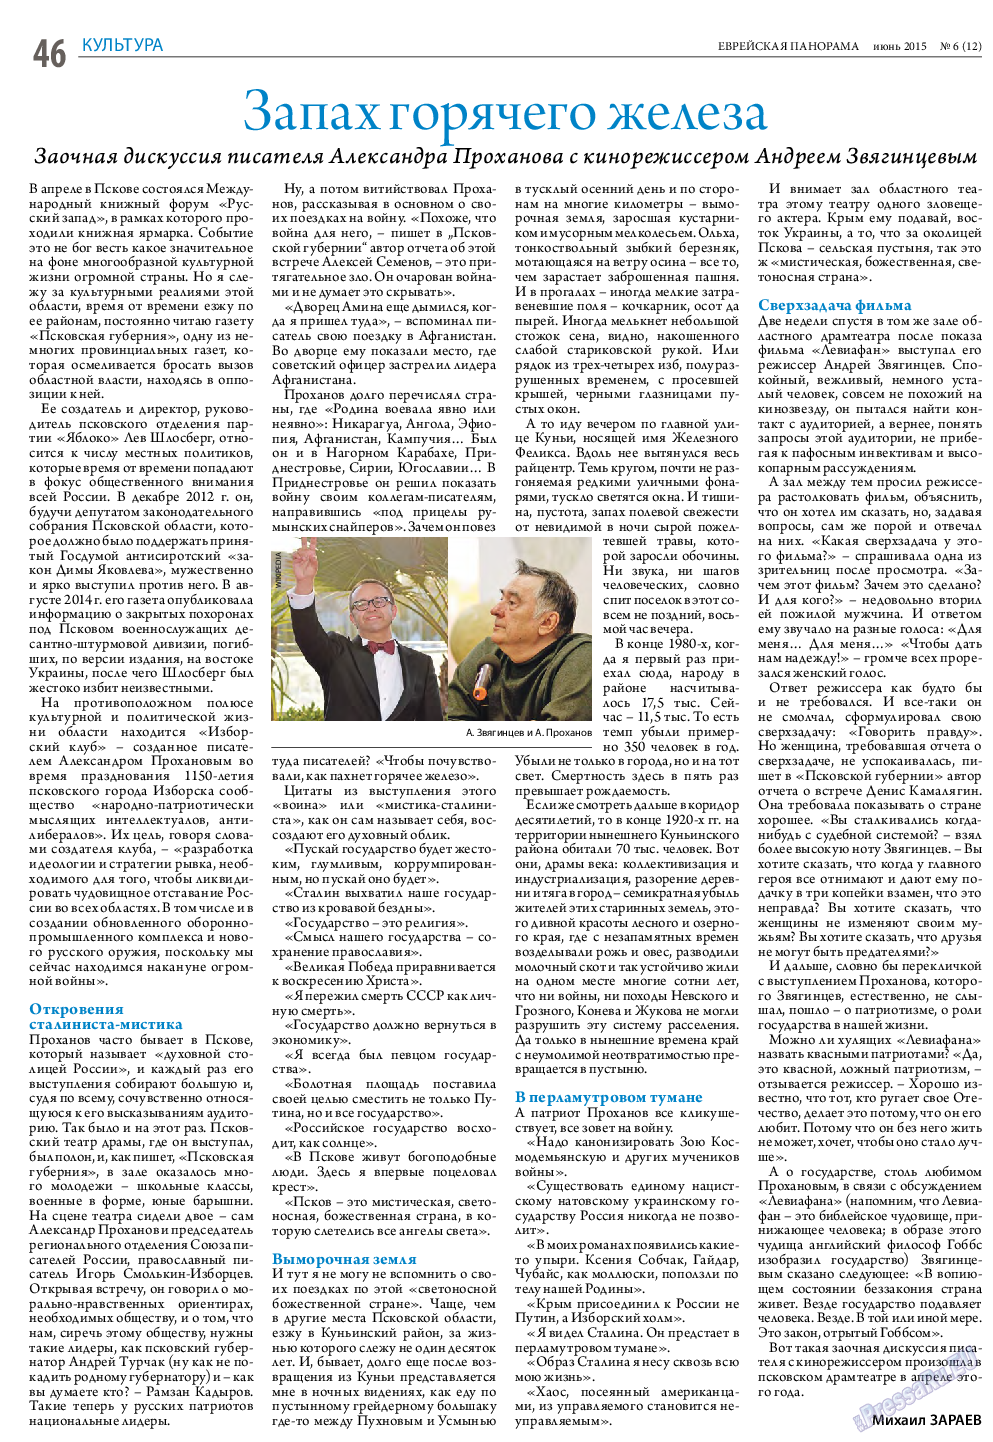 Еврейская панорама, газета. 2015 №6 стр.46